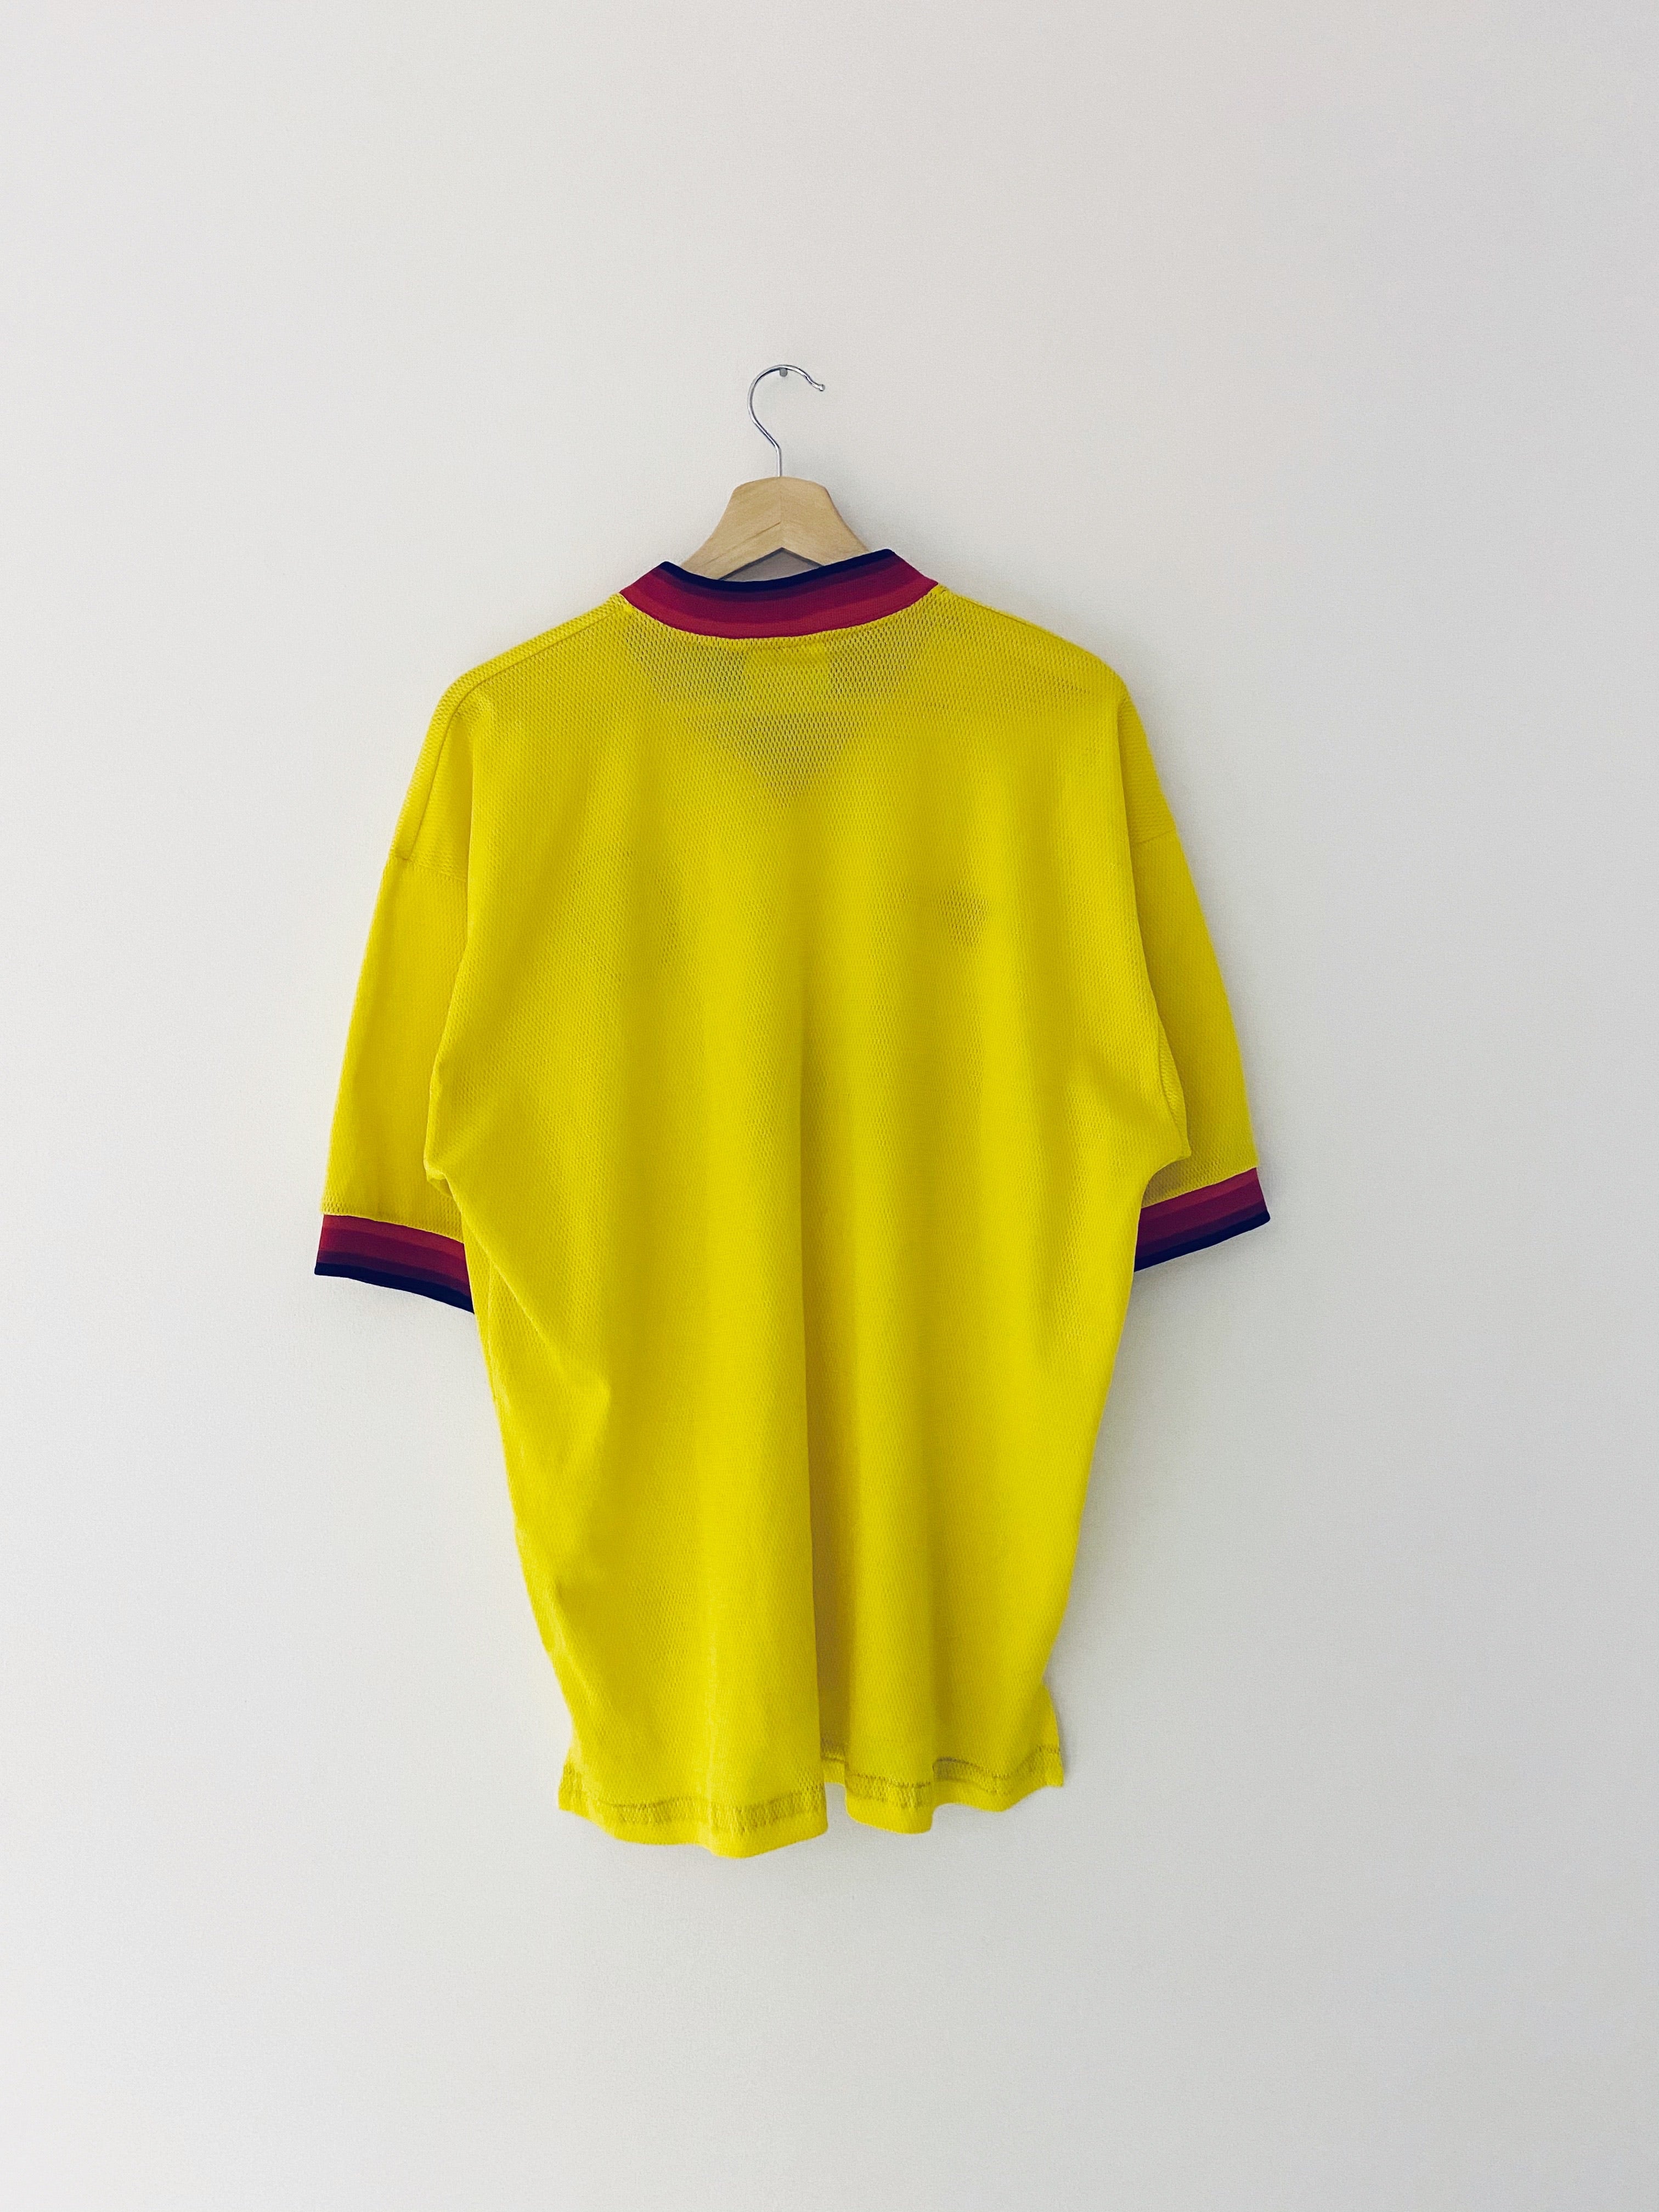 1997/99 Liverpool Away Shirt (L) 9/10